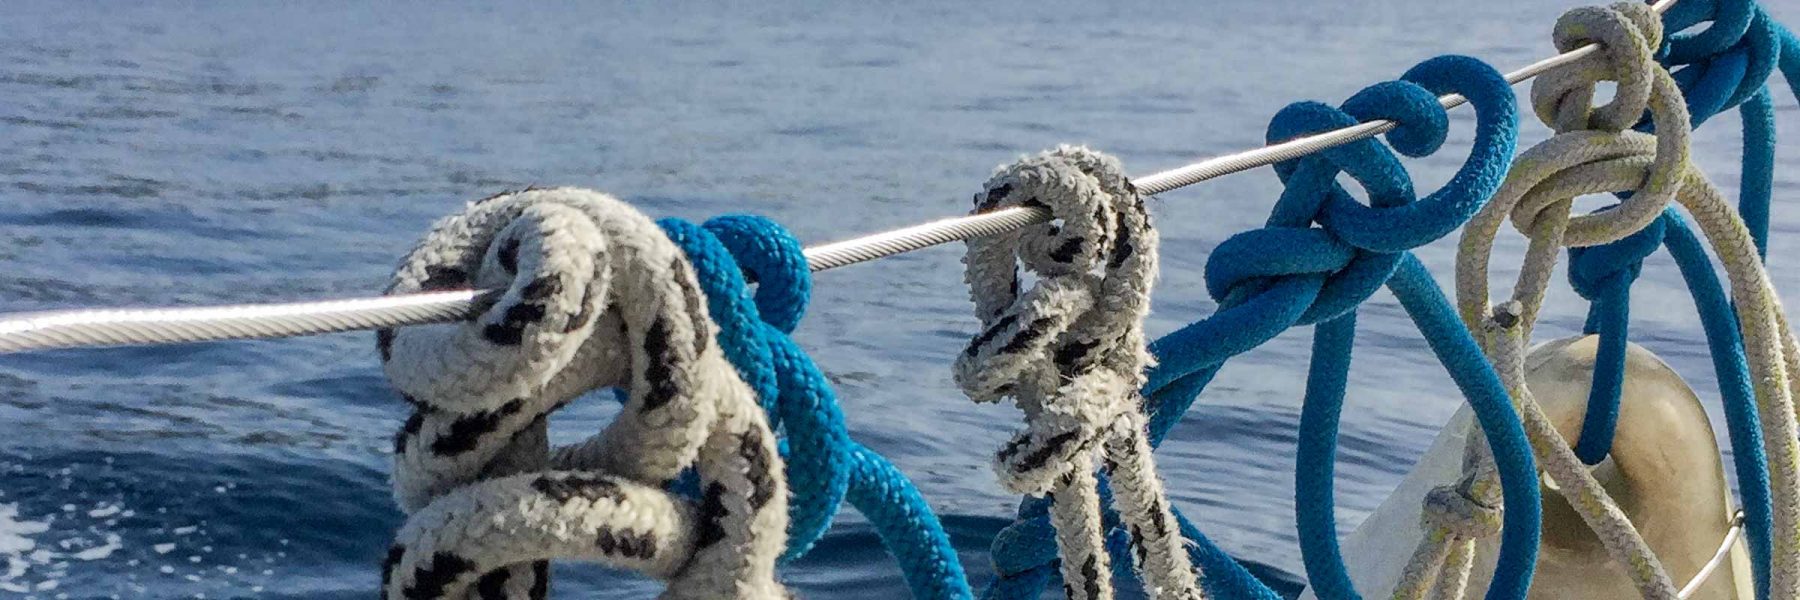 Sailing boat yacht fender knots